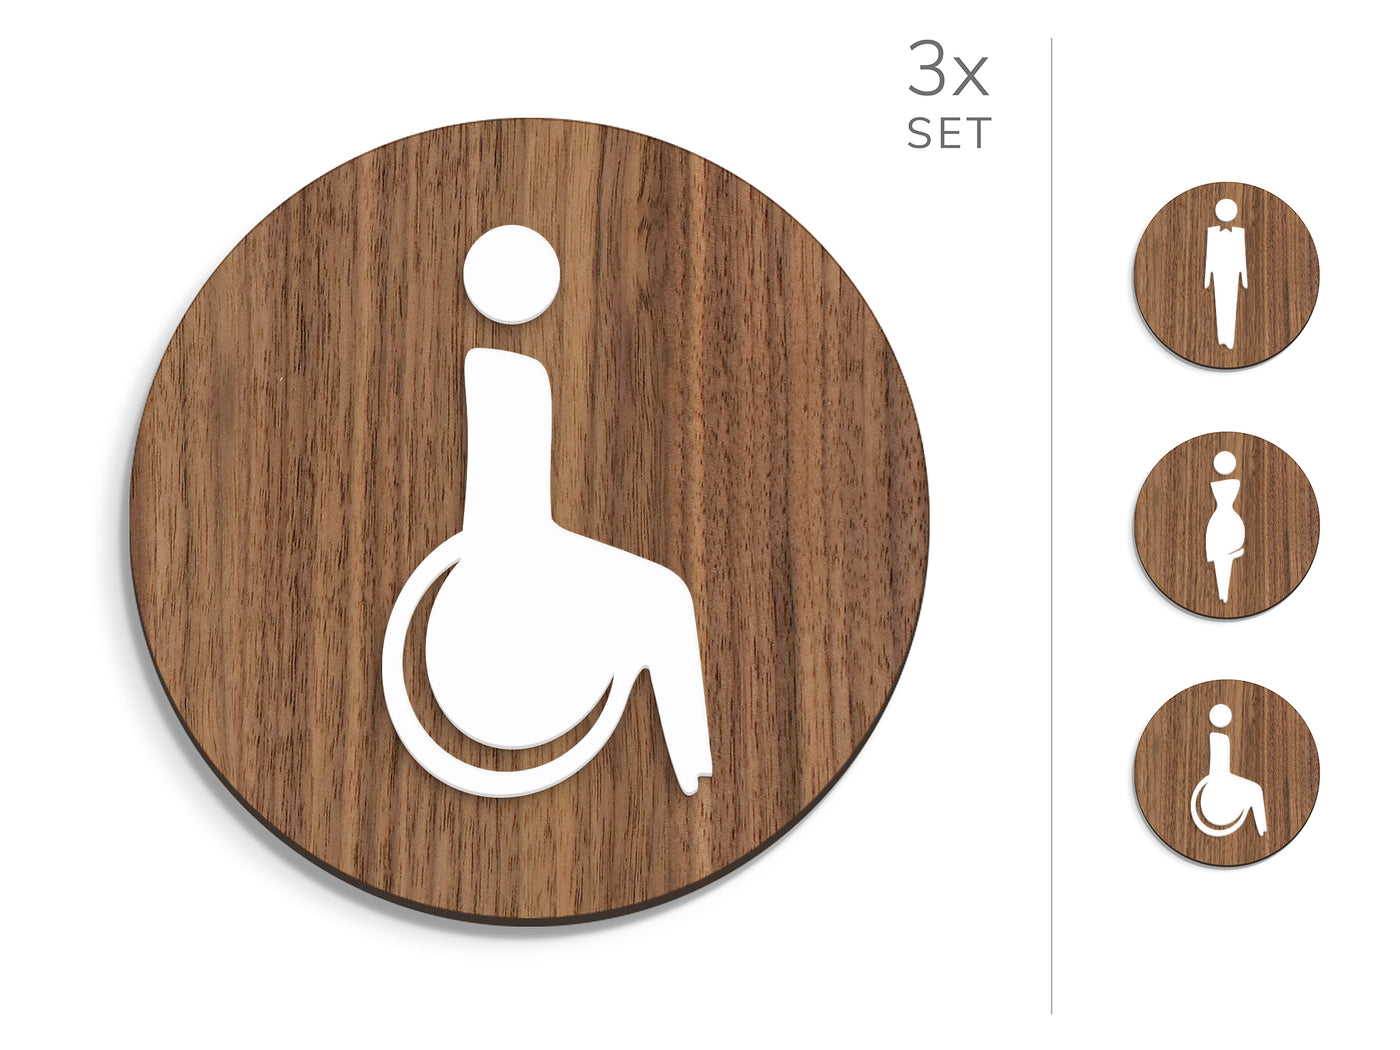 Elegant, 3x Round Base - Restroom Signs Set - Man, Woman, Disabled